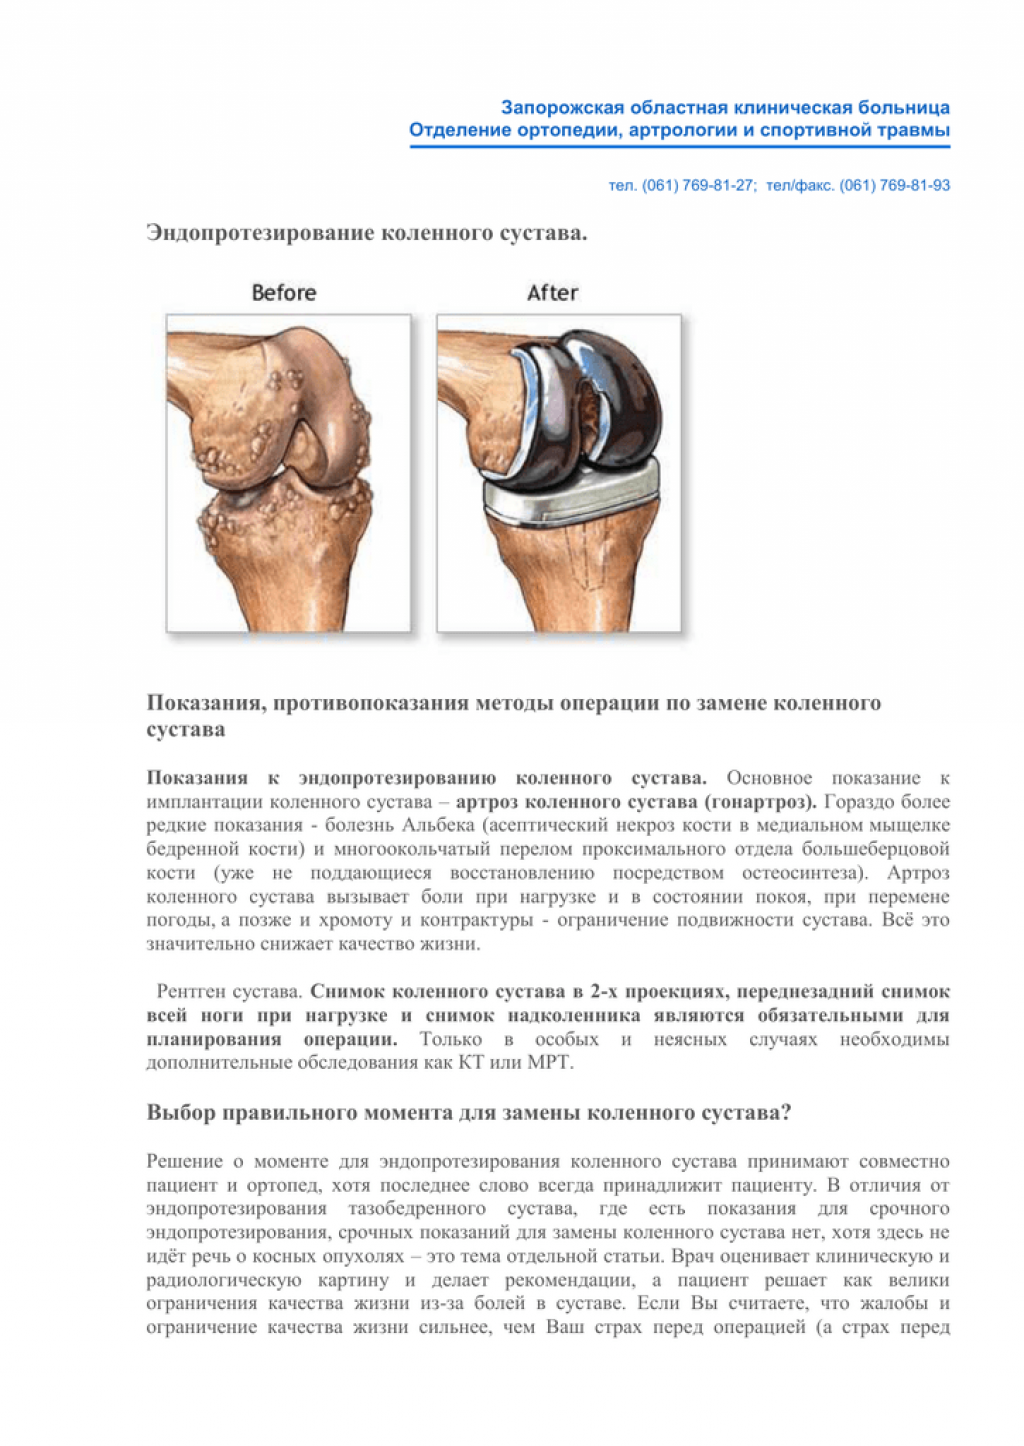 Замена сустава осложнения. Эндопротезирование коленного сустава. Операция тотального эндопротезирования коленного сустава. ТЭП эндопротезирование коленного сустава. Тотальное эндопротезирование коленного сустава схема операции.